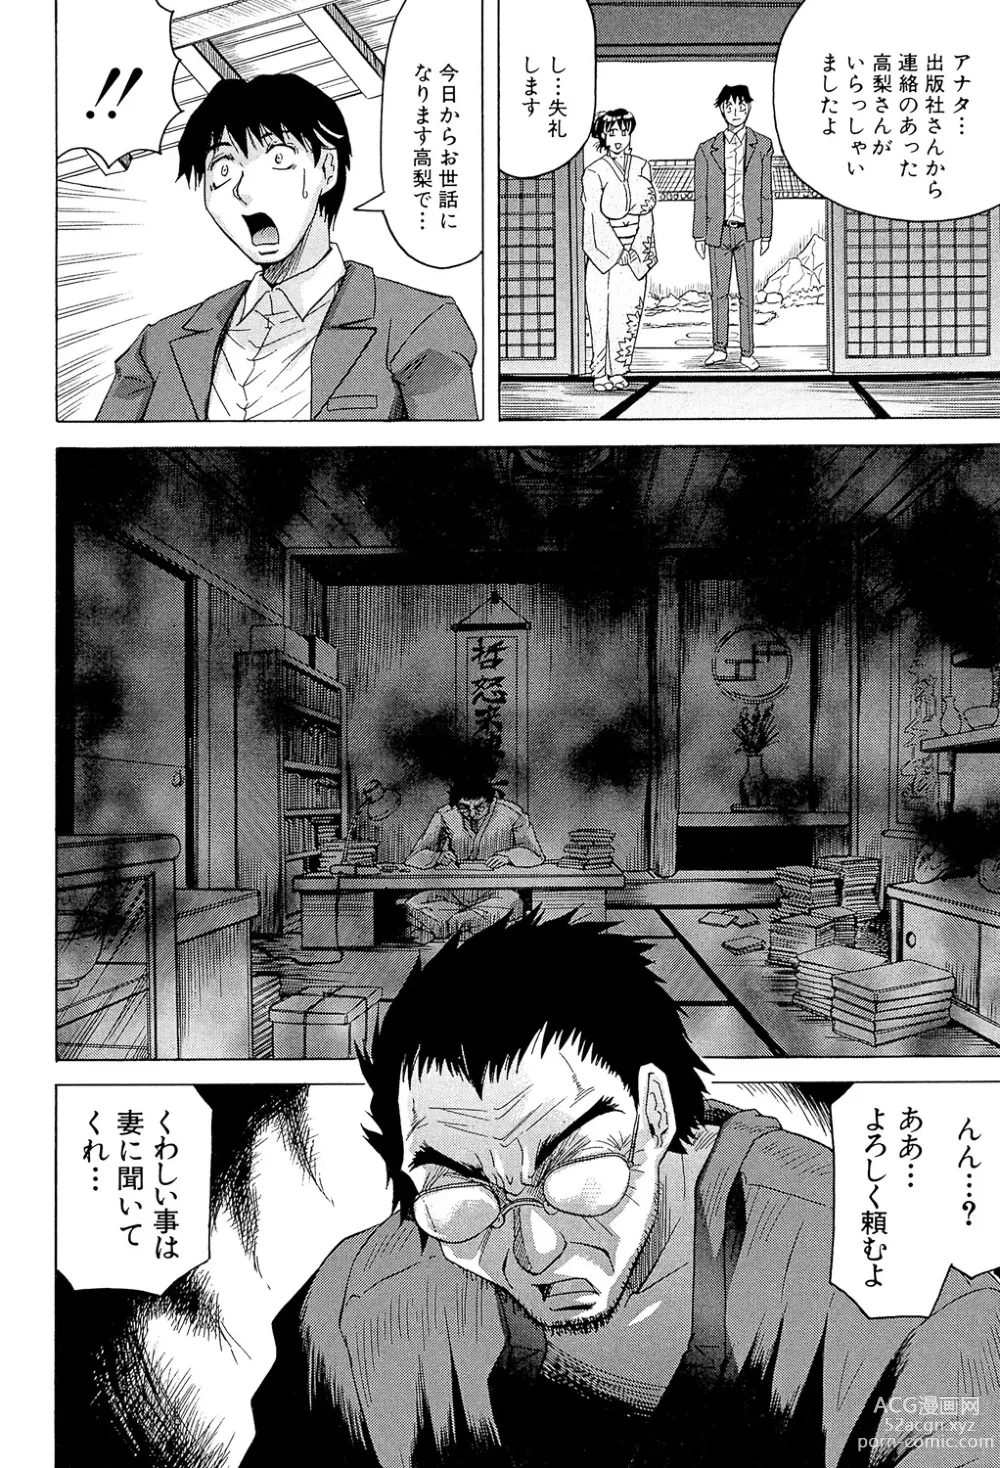 Page 10 of manga Oyako no Utage